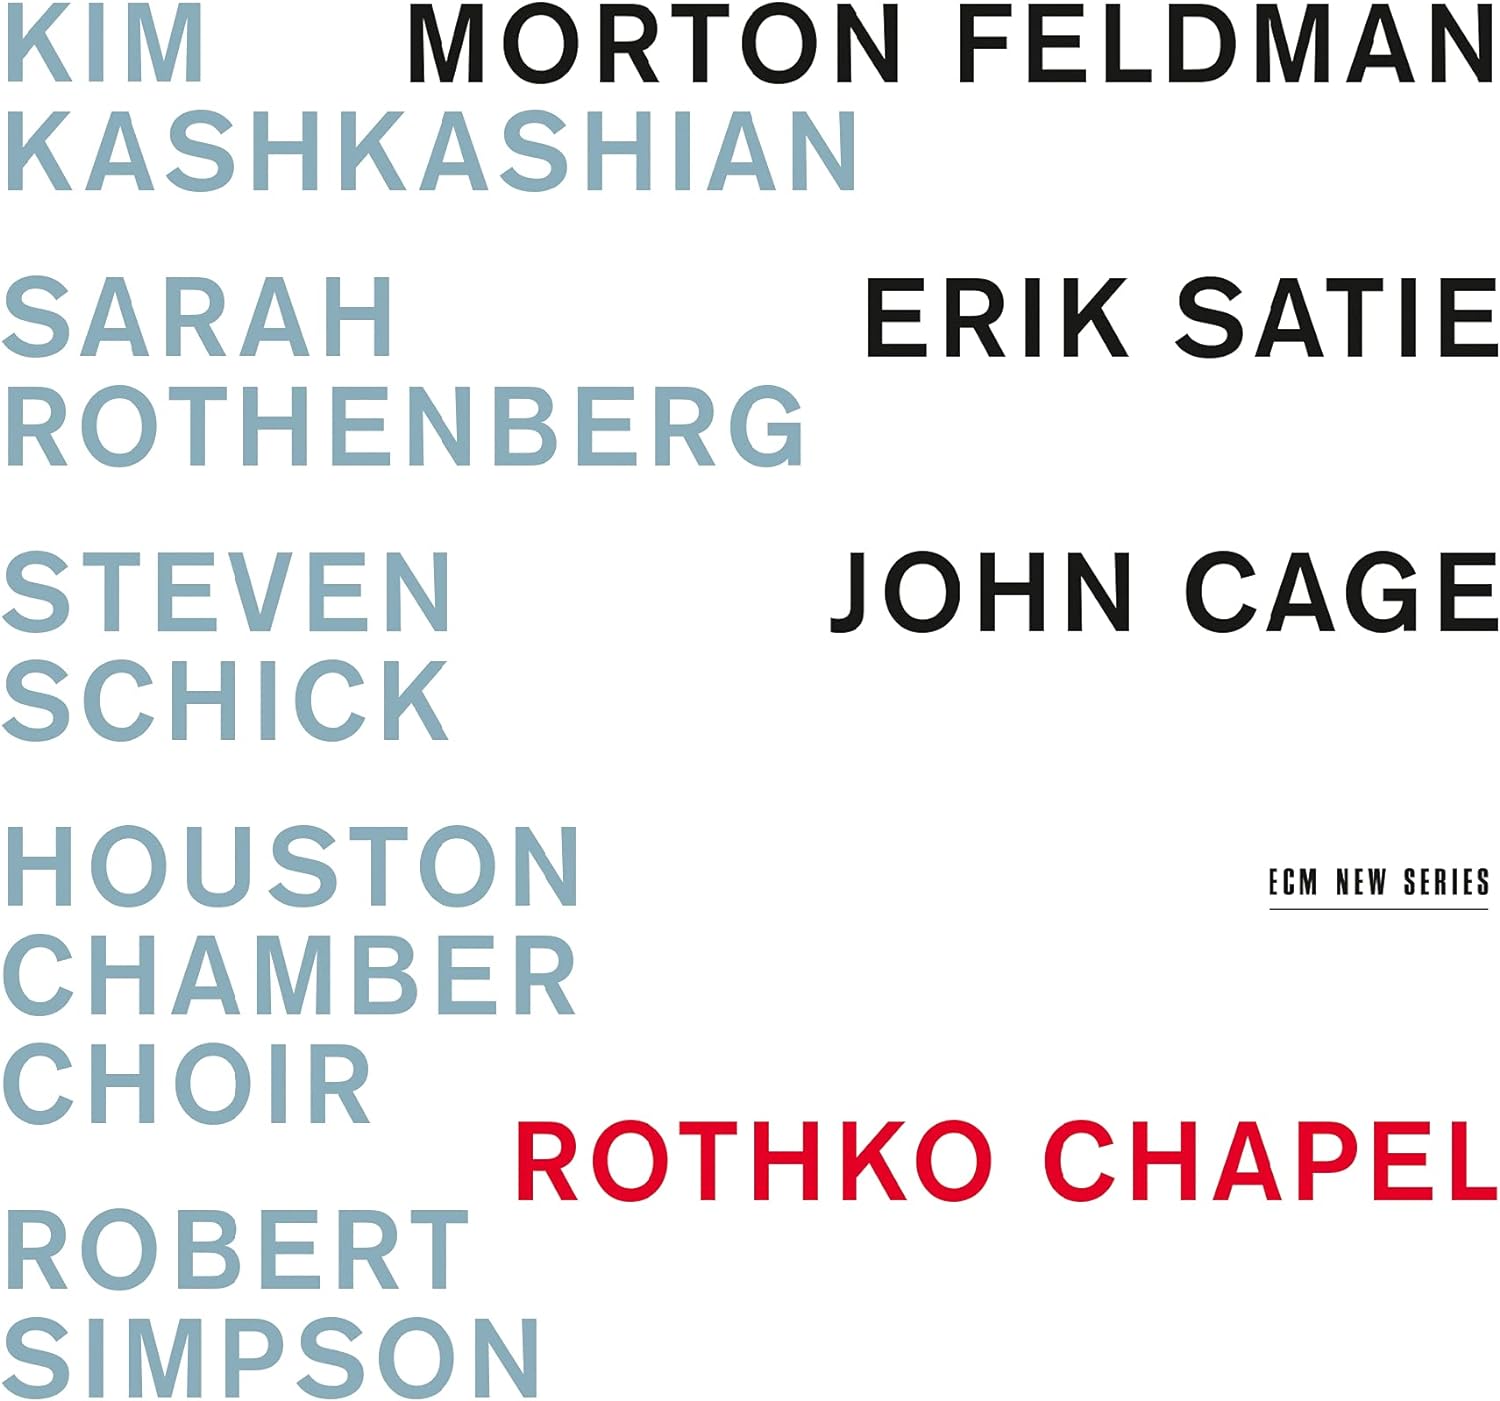 Rothko Chapel | Kim Kashkashian, Sarah Rothenberg, Steven Schick, Houston Chamber Choir, Robert Simpson